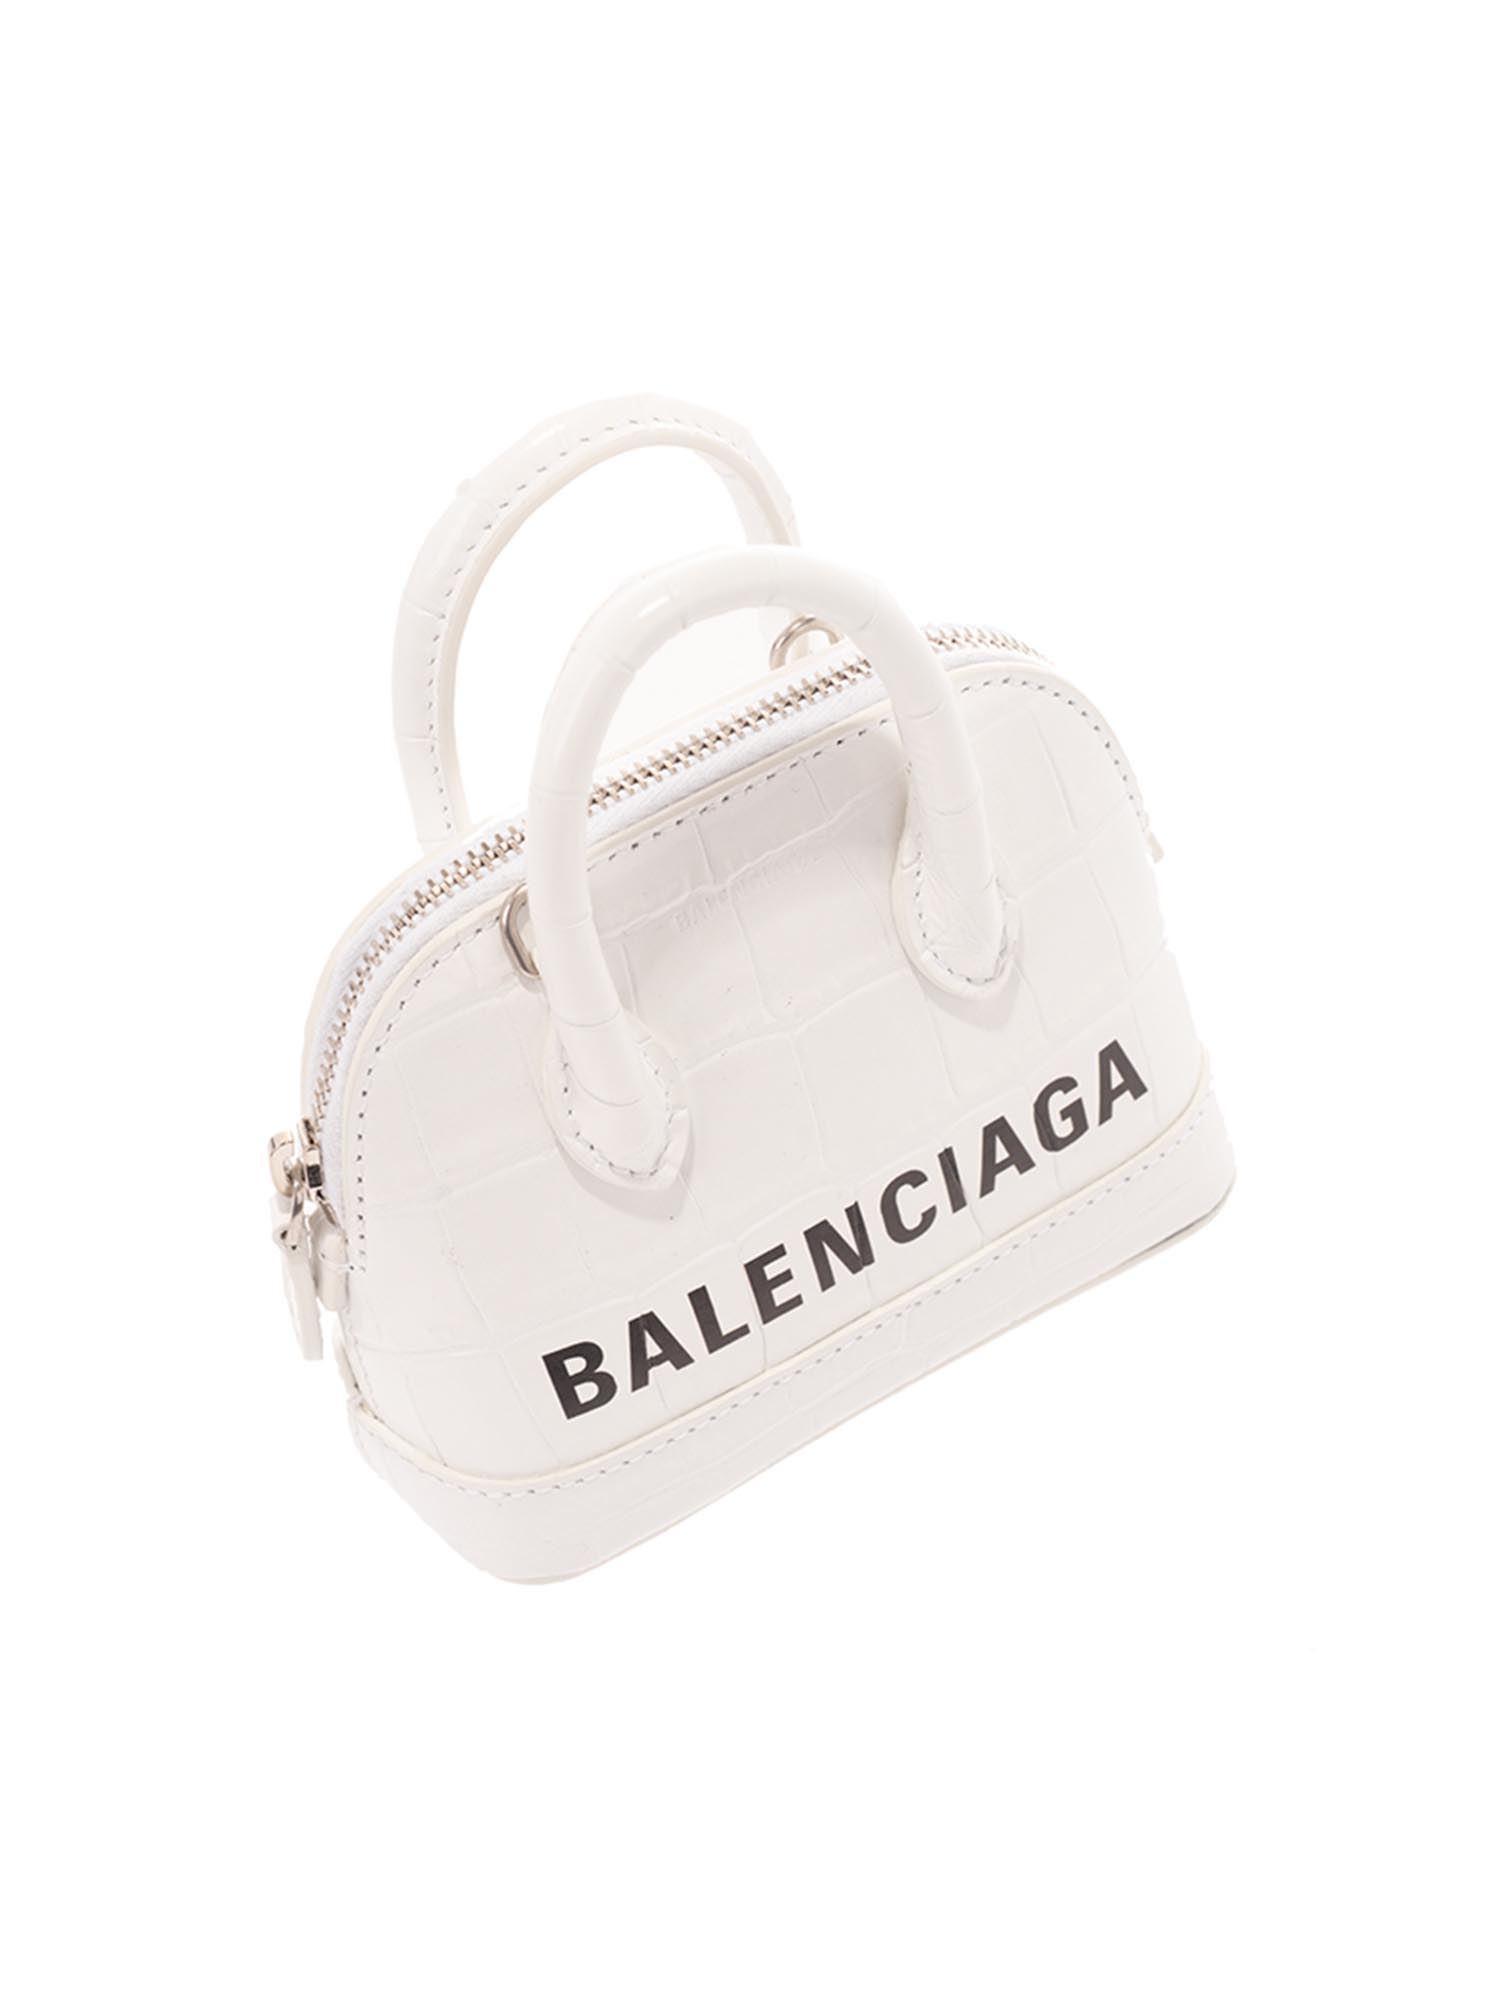 Balenciaga Leather Ville Xxs Top Handle Bag in White/Black (White) - Lyst